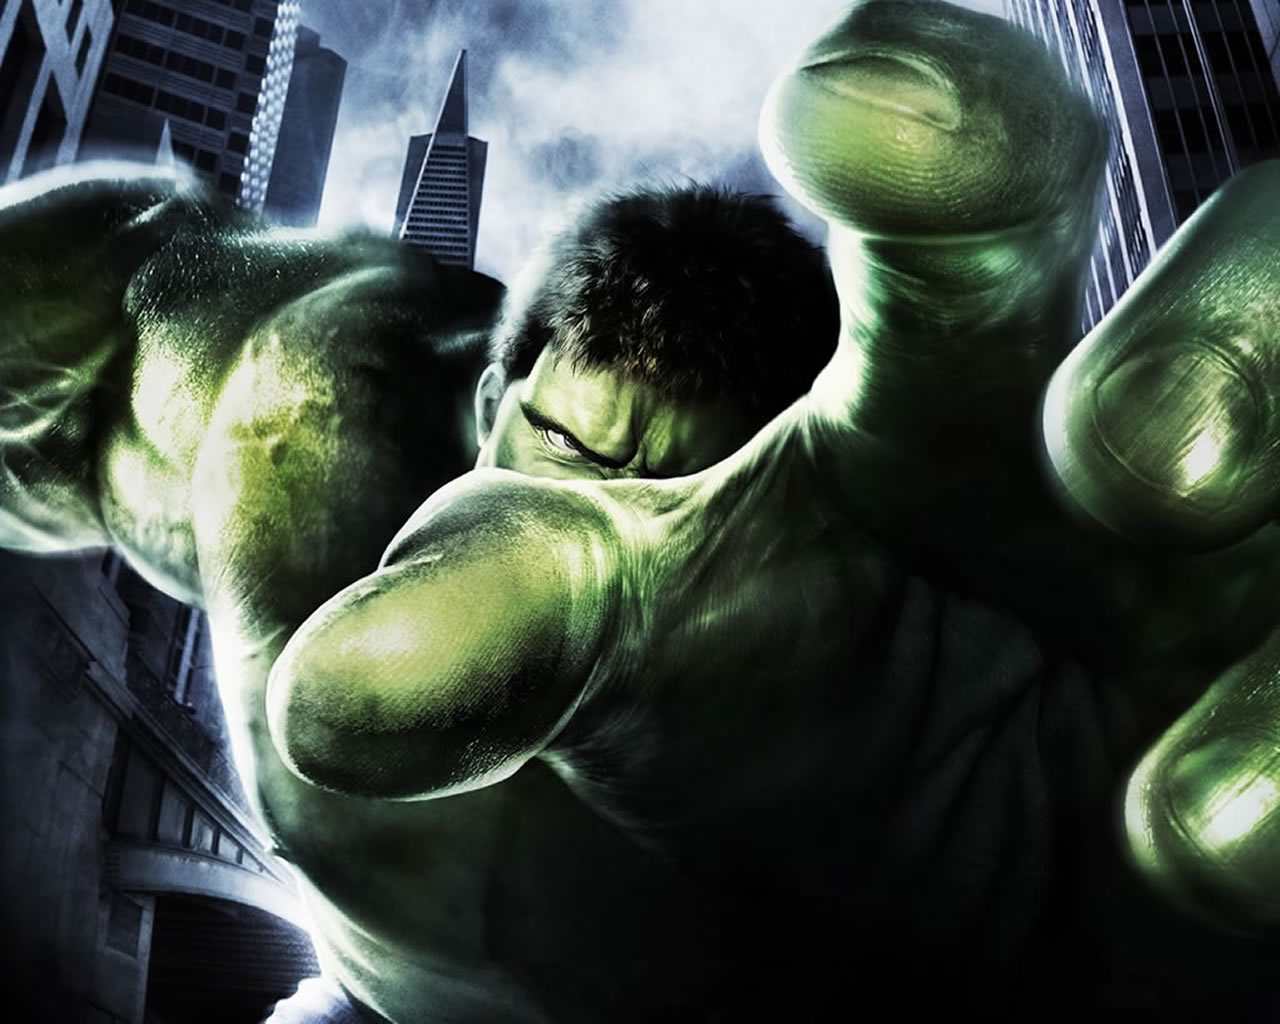 download wallpaper: De Hulk wallpaper